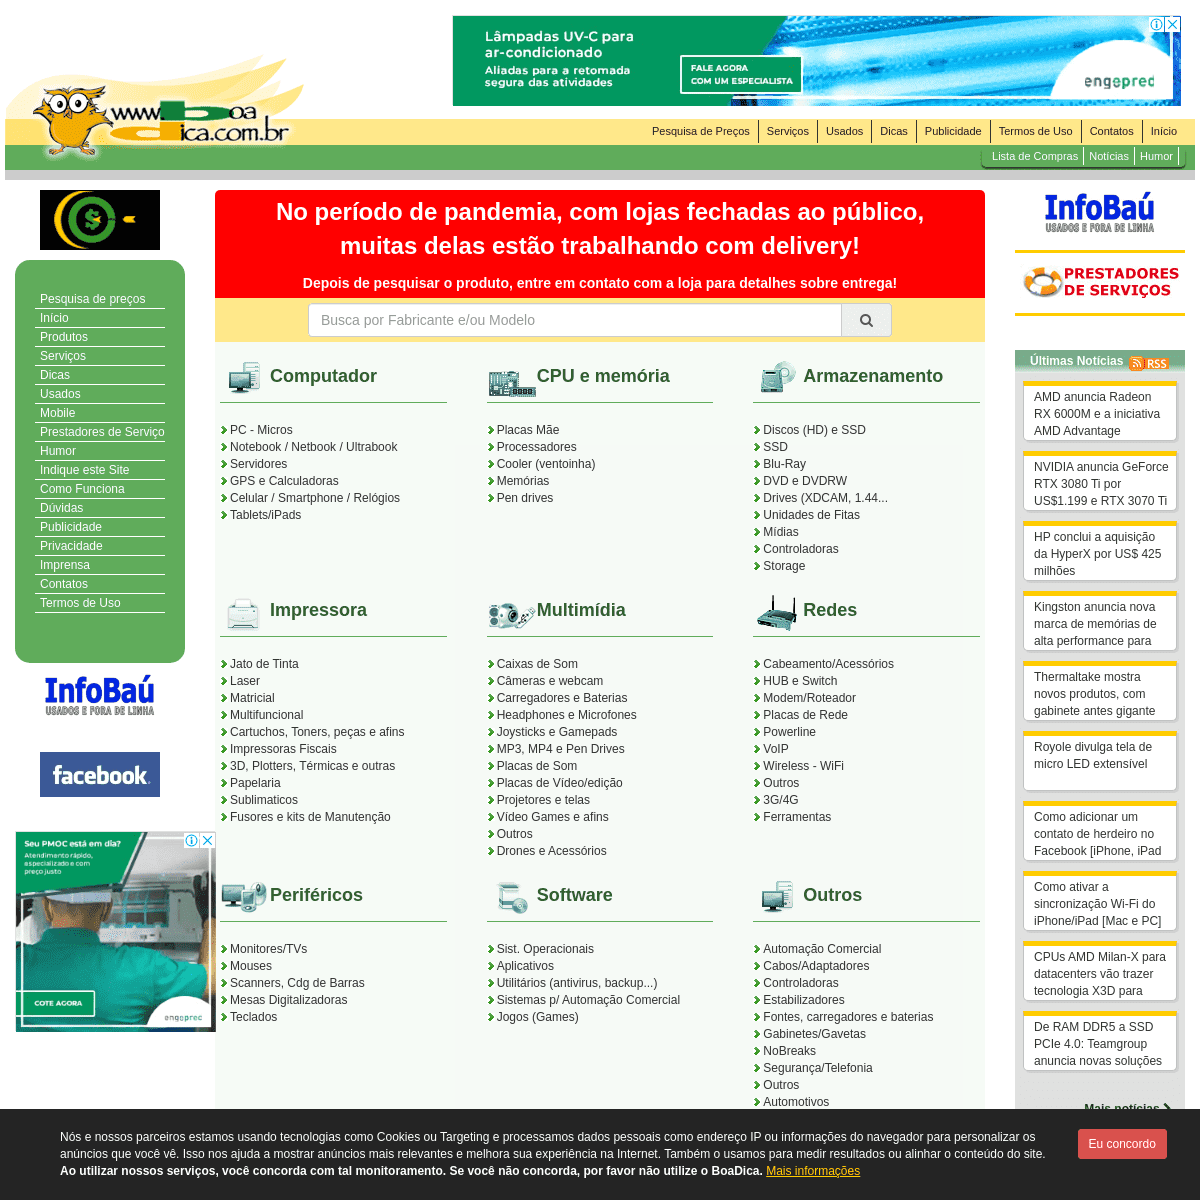 A complete backup of https://boadica.com.br